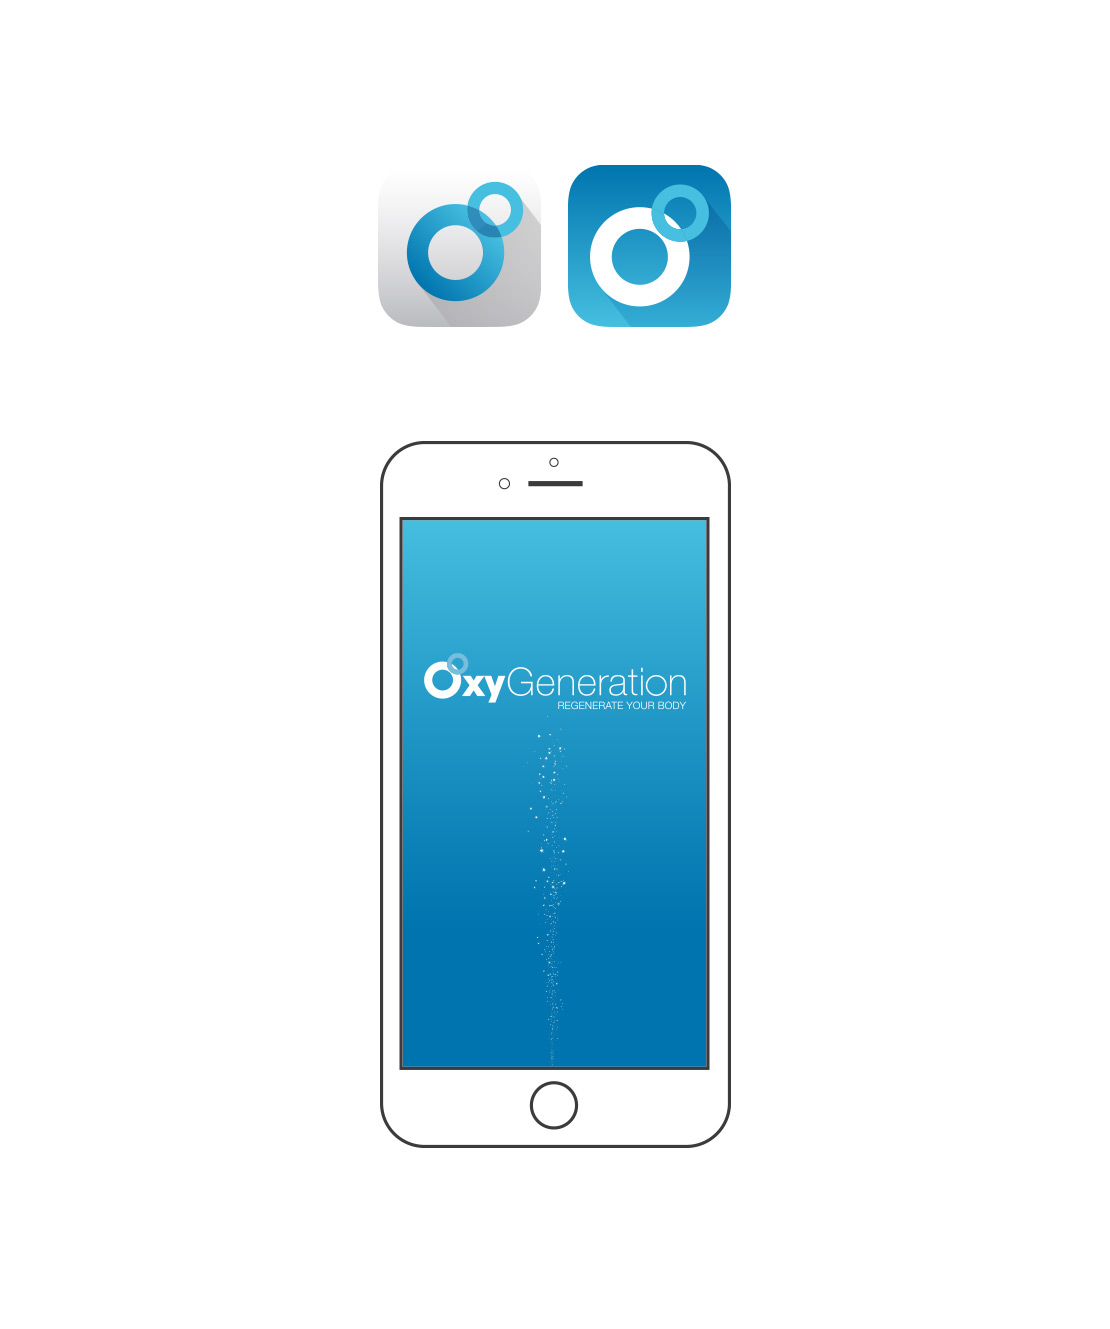 OxyGeneration App Icon and splash screen